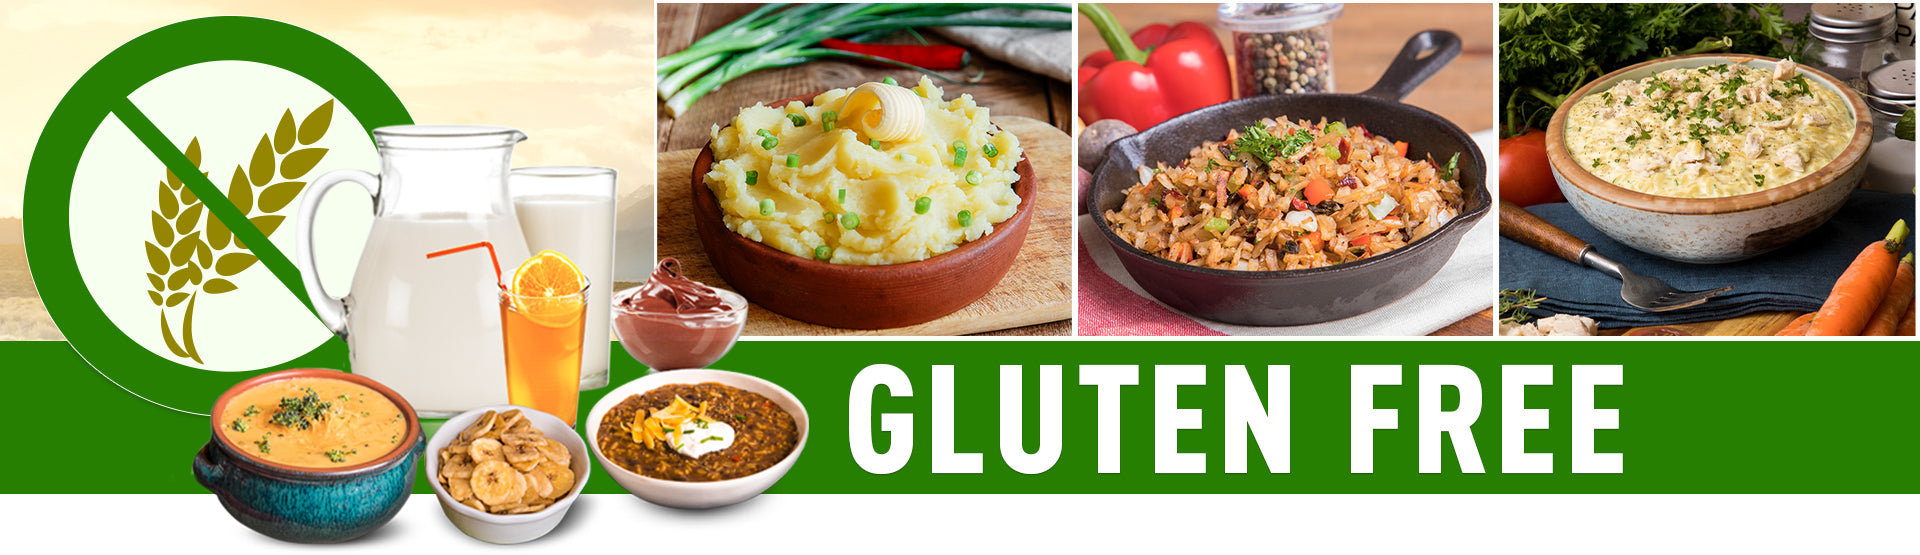 Gluten Free Emergency Food Storage - an assortment of gluten free emergency foods